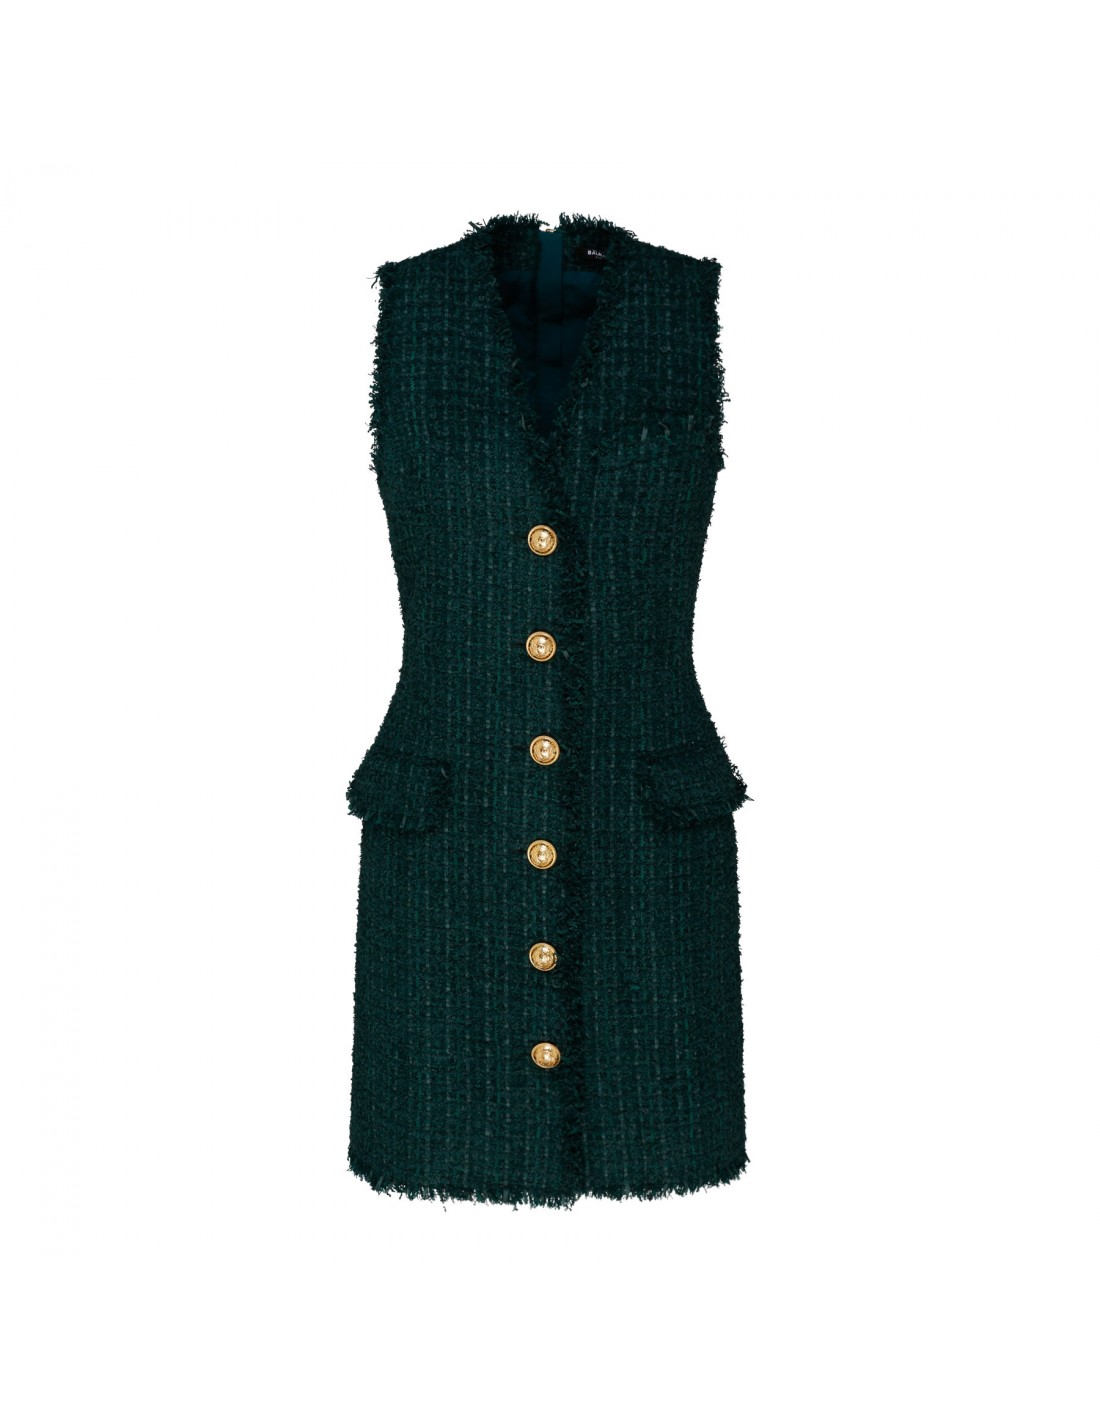 Sleeveless dark green tweed dress